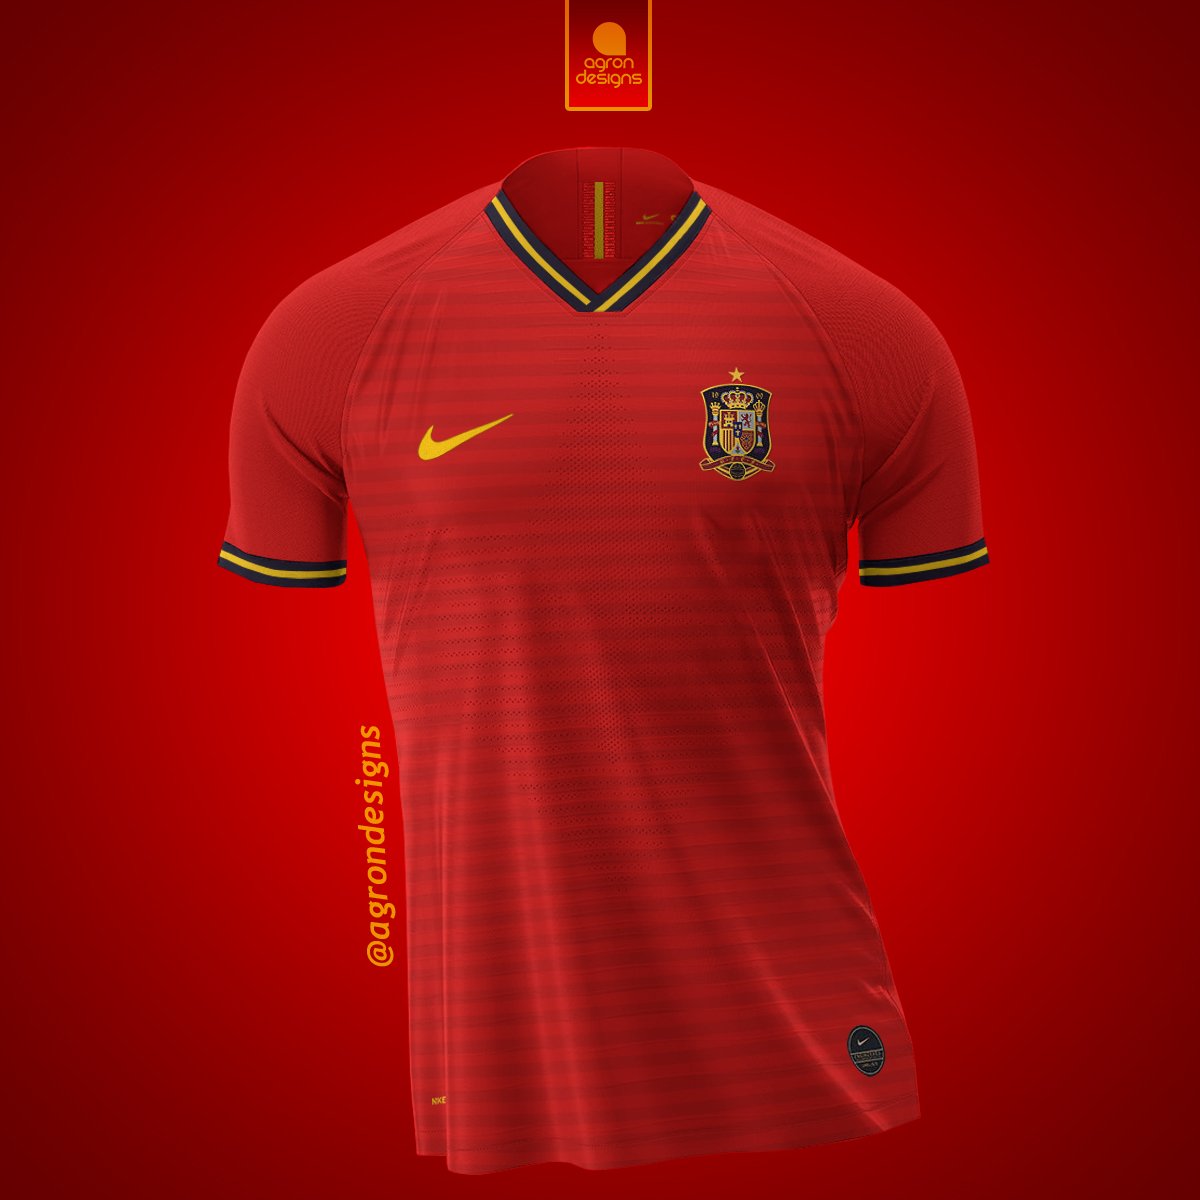 Agron Meta on Twitter: "Nike X Spain #nike #spain #espana #madrid #futebol #camiseta #kit #kitdesign #concept #uefa #fifa #football #design #graphicdesign #europeanqualifiers #europe #international Mockup: @_santiagolazo ...